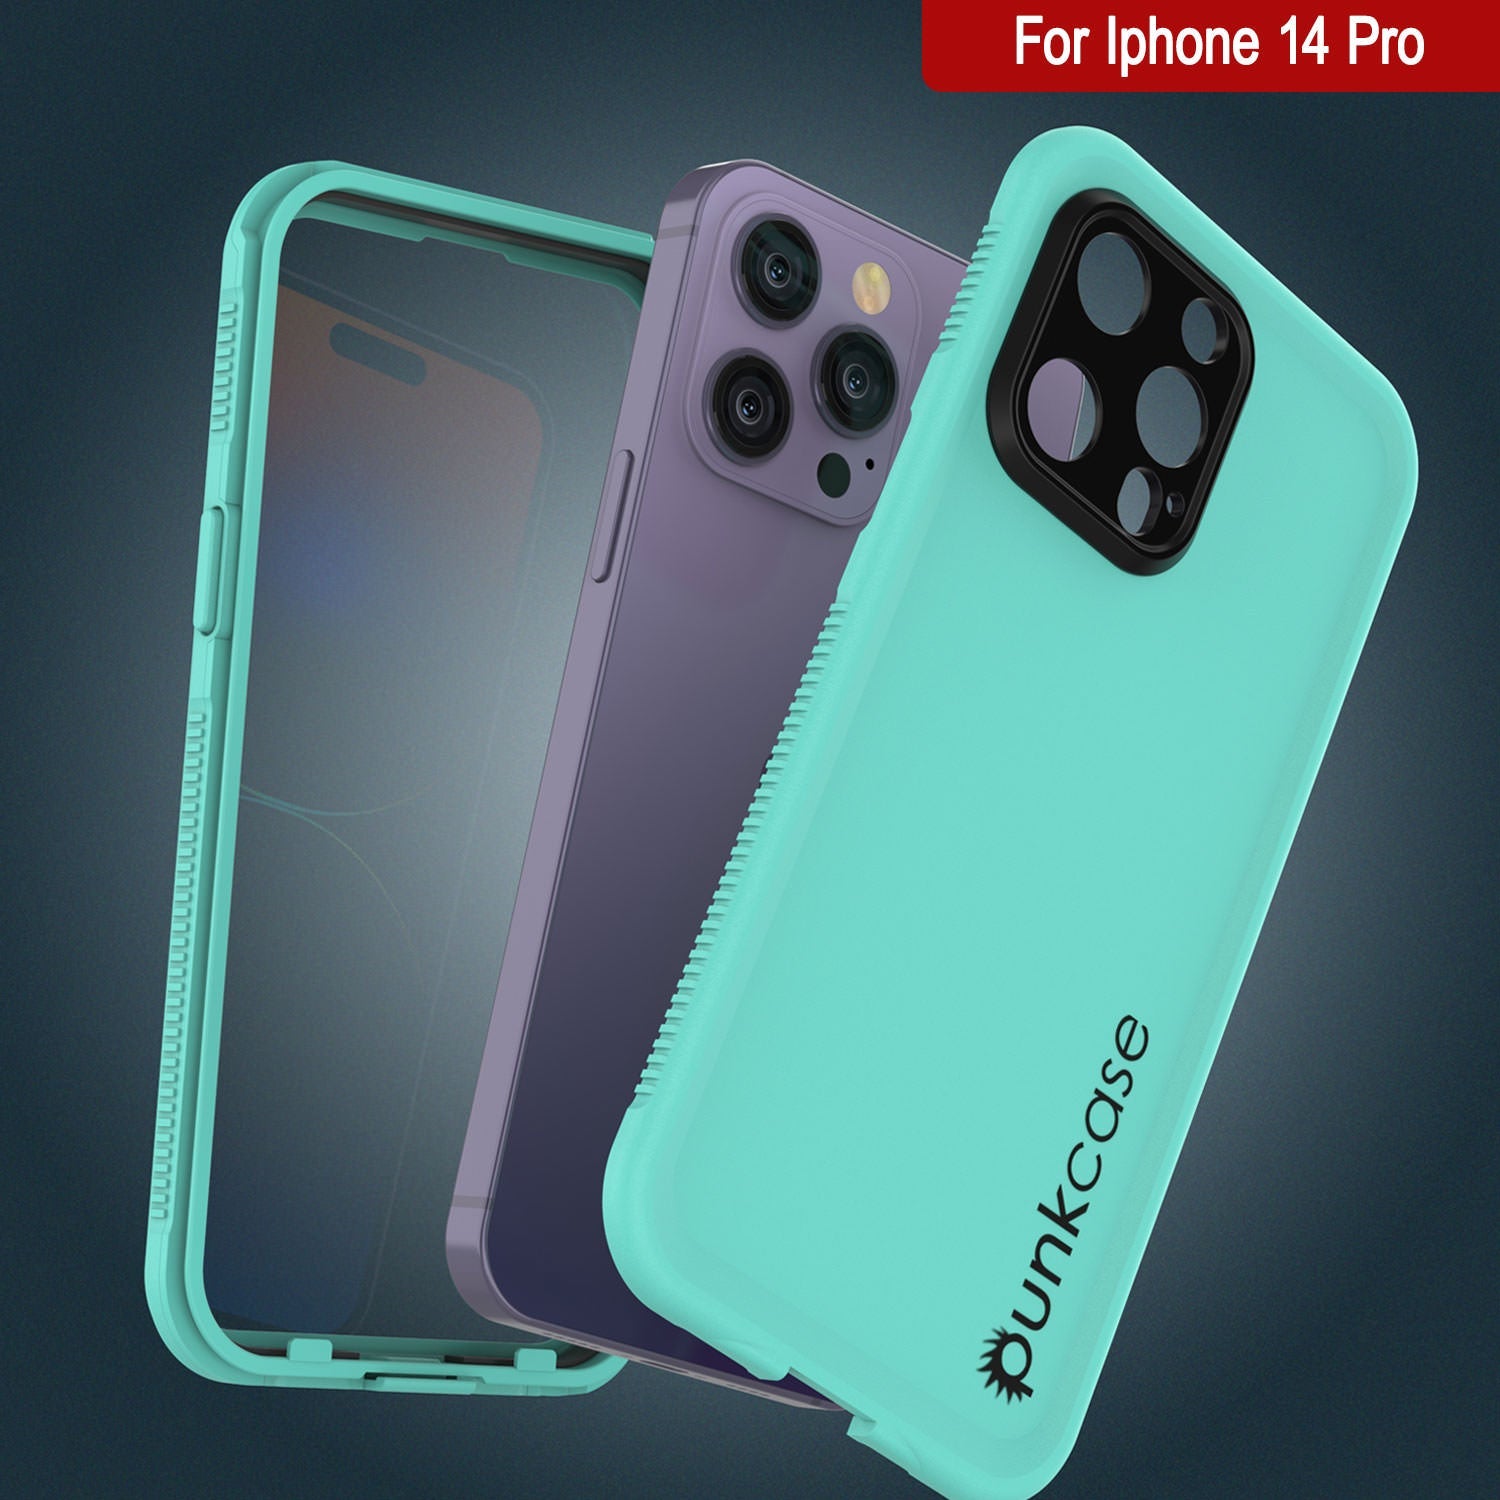 Punkcase iPhone 14 Pro Waterproof Case [Aqua Series] Armor Cover [Blue]